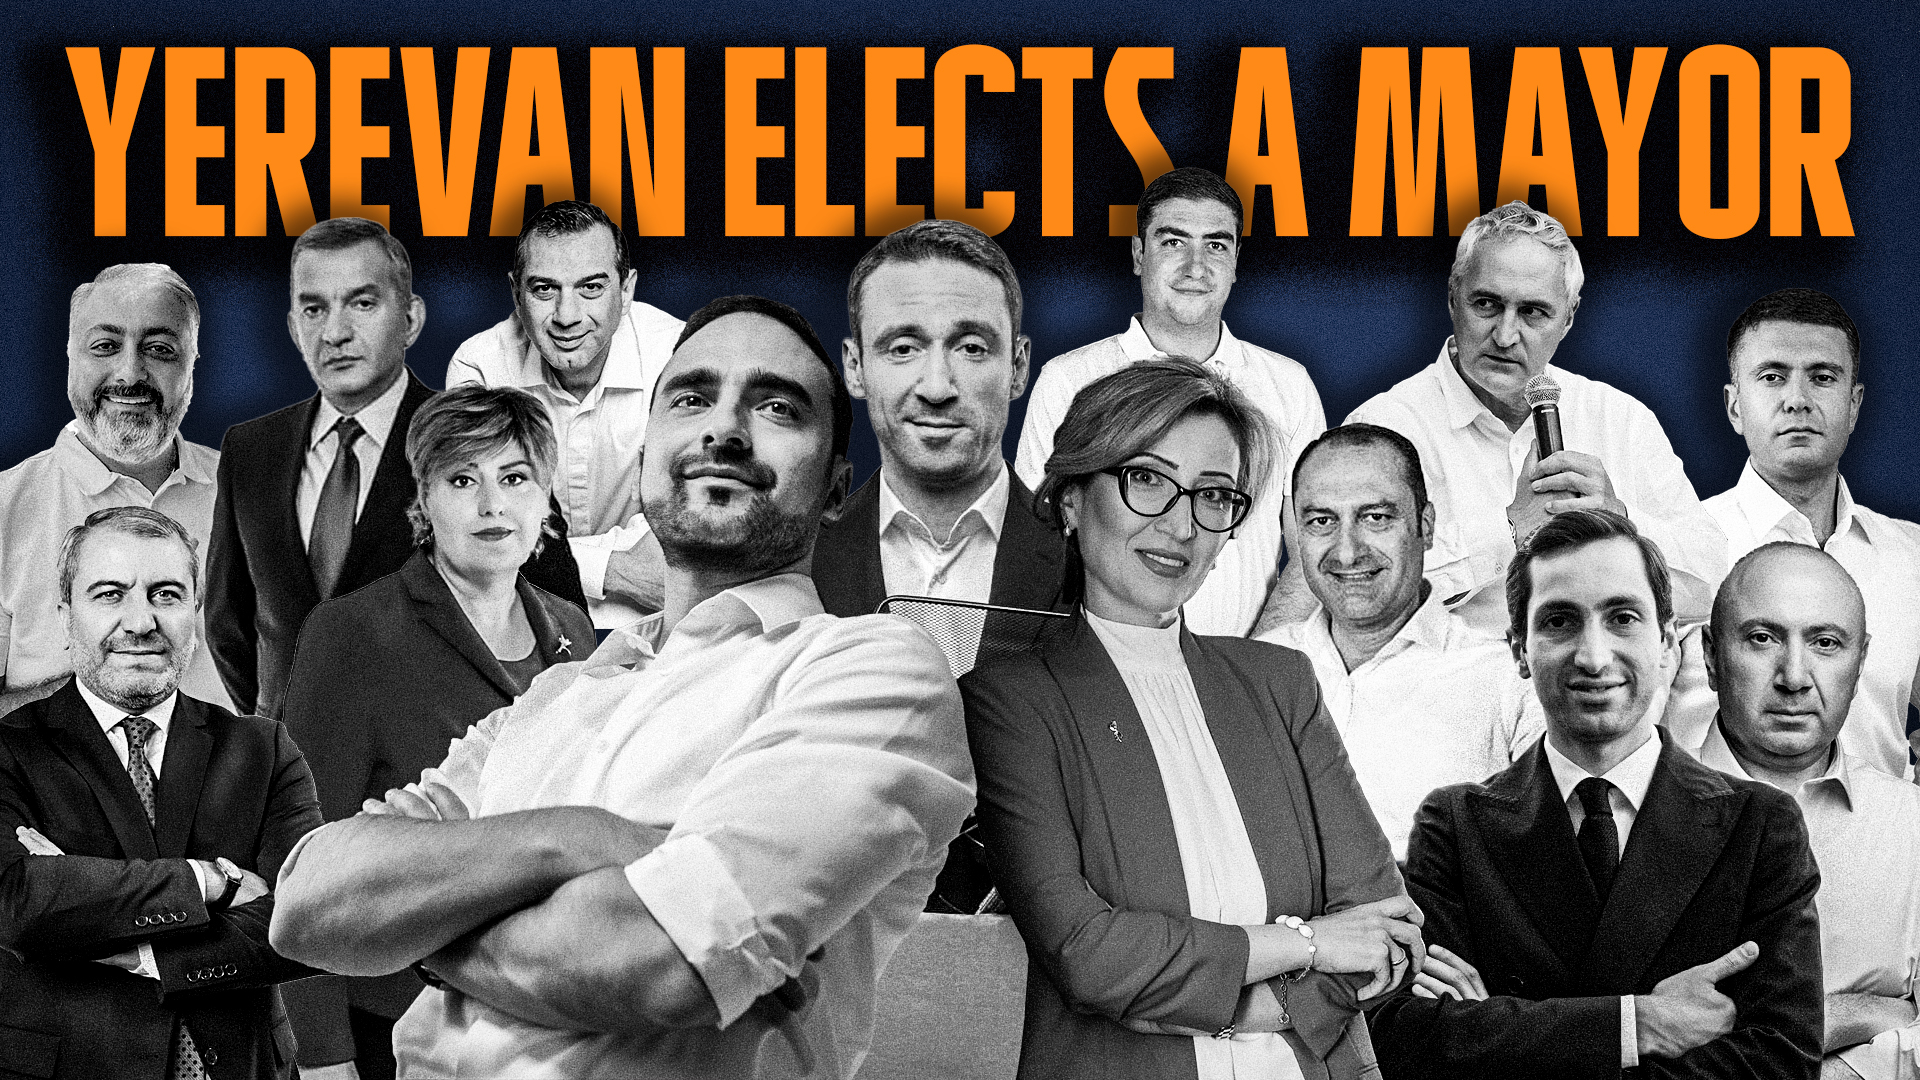 Meet the Candidates: YEREVAN ELECTIONS